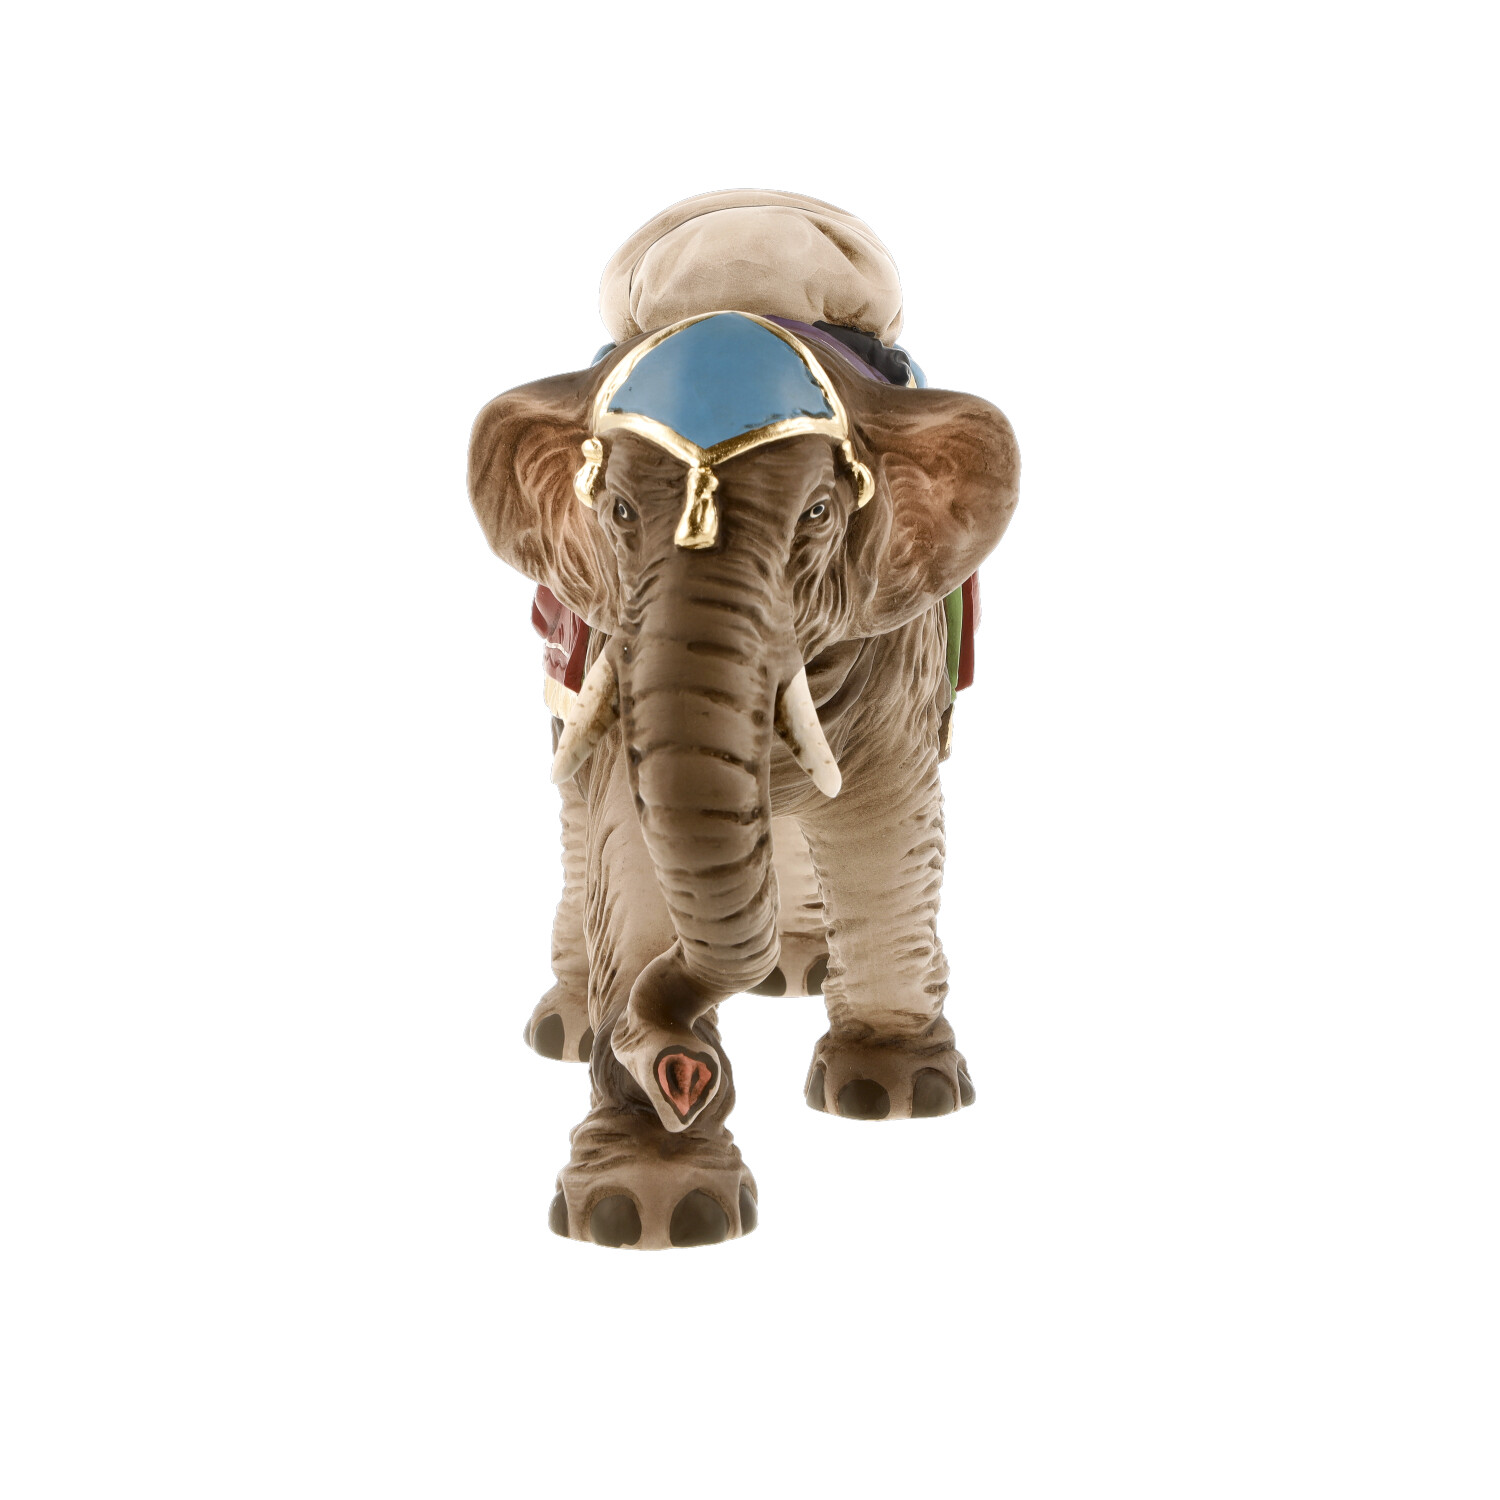 Elephant with luggage - Marolin Nativity figure - made in Germany